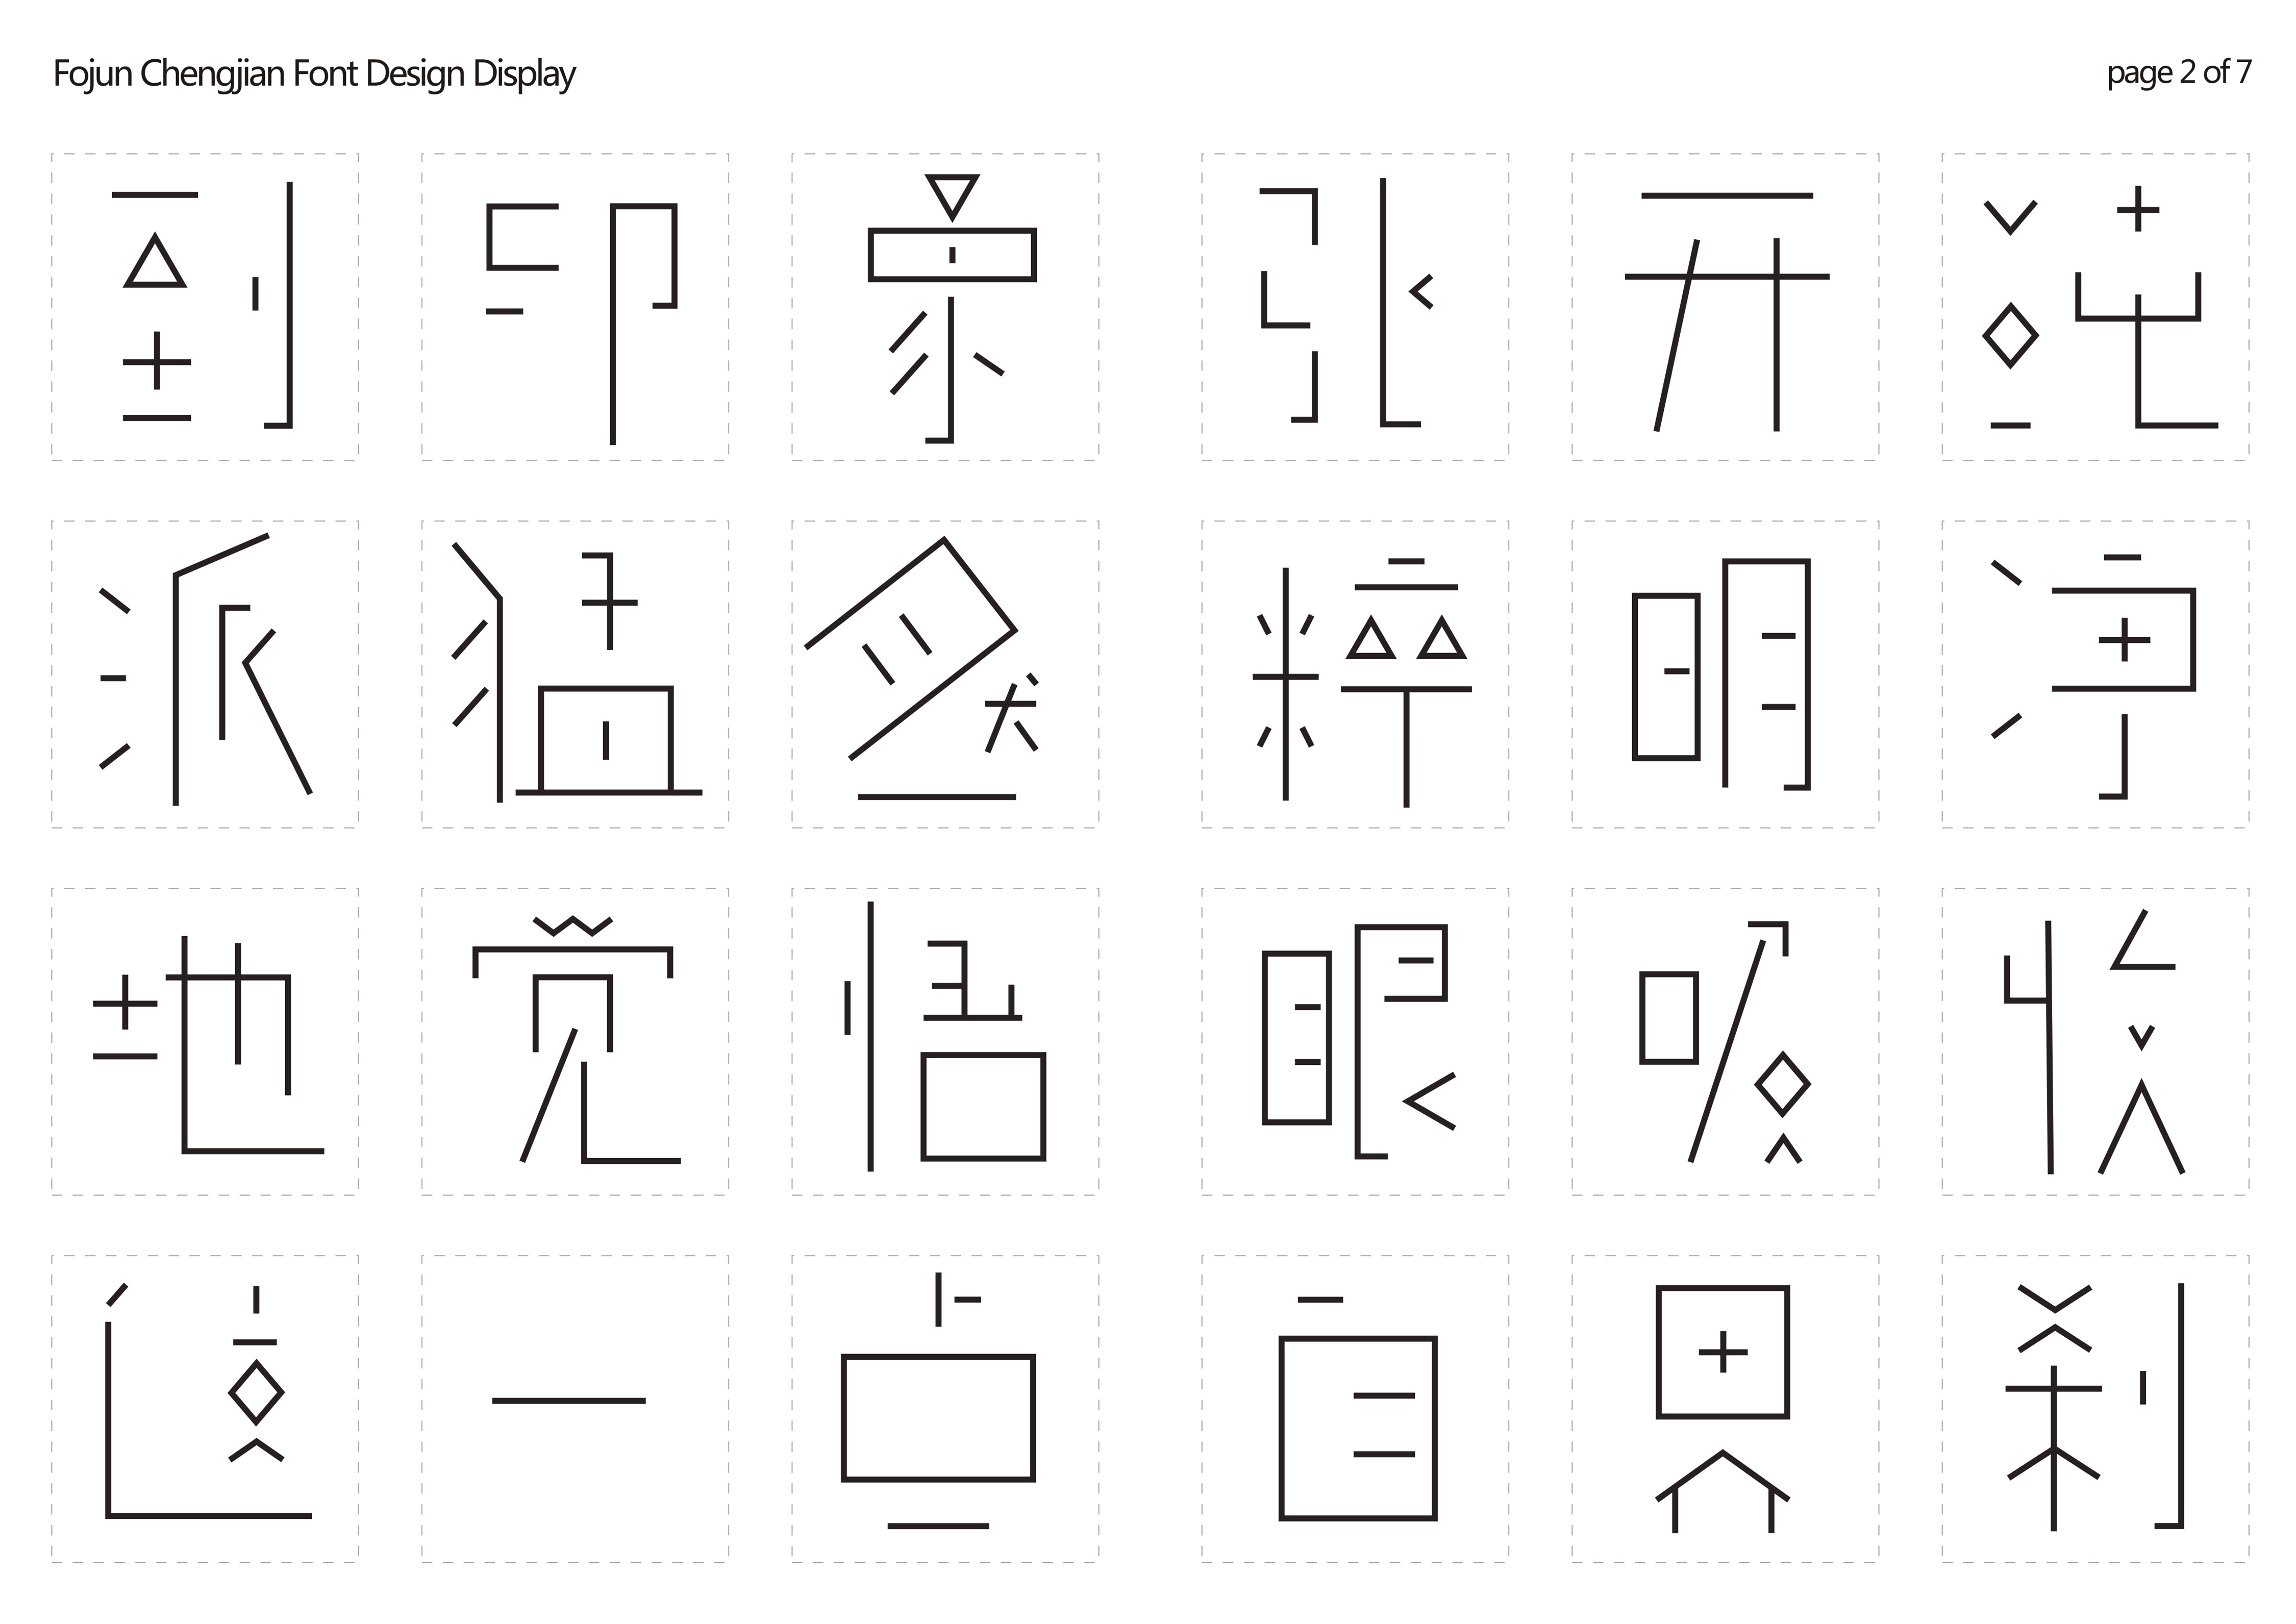 Fojun Chengjian Font Design